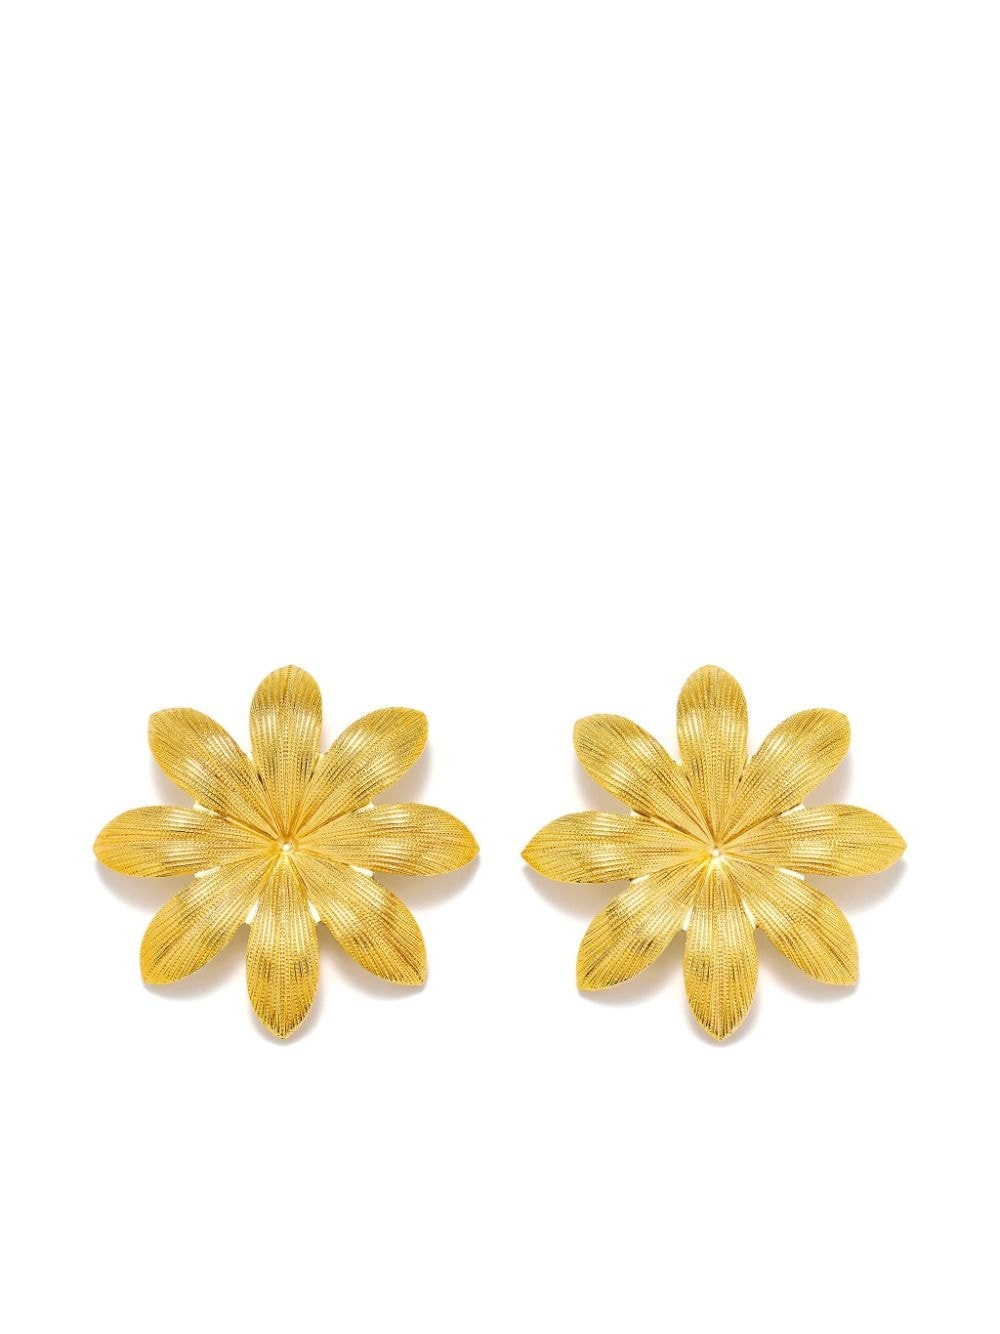 Sonia Liliun earrings - 1